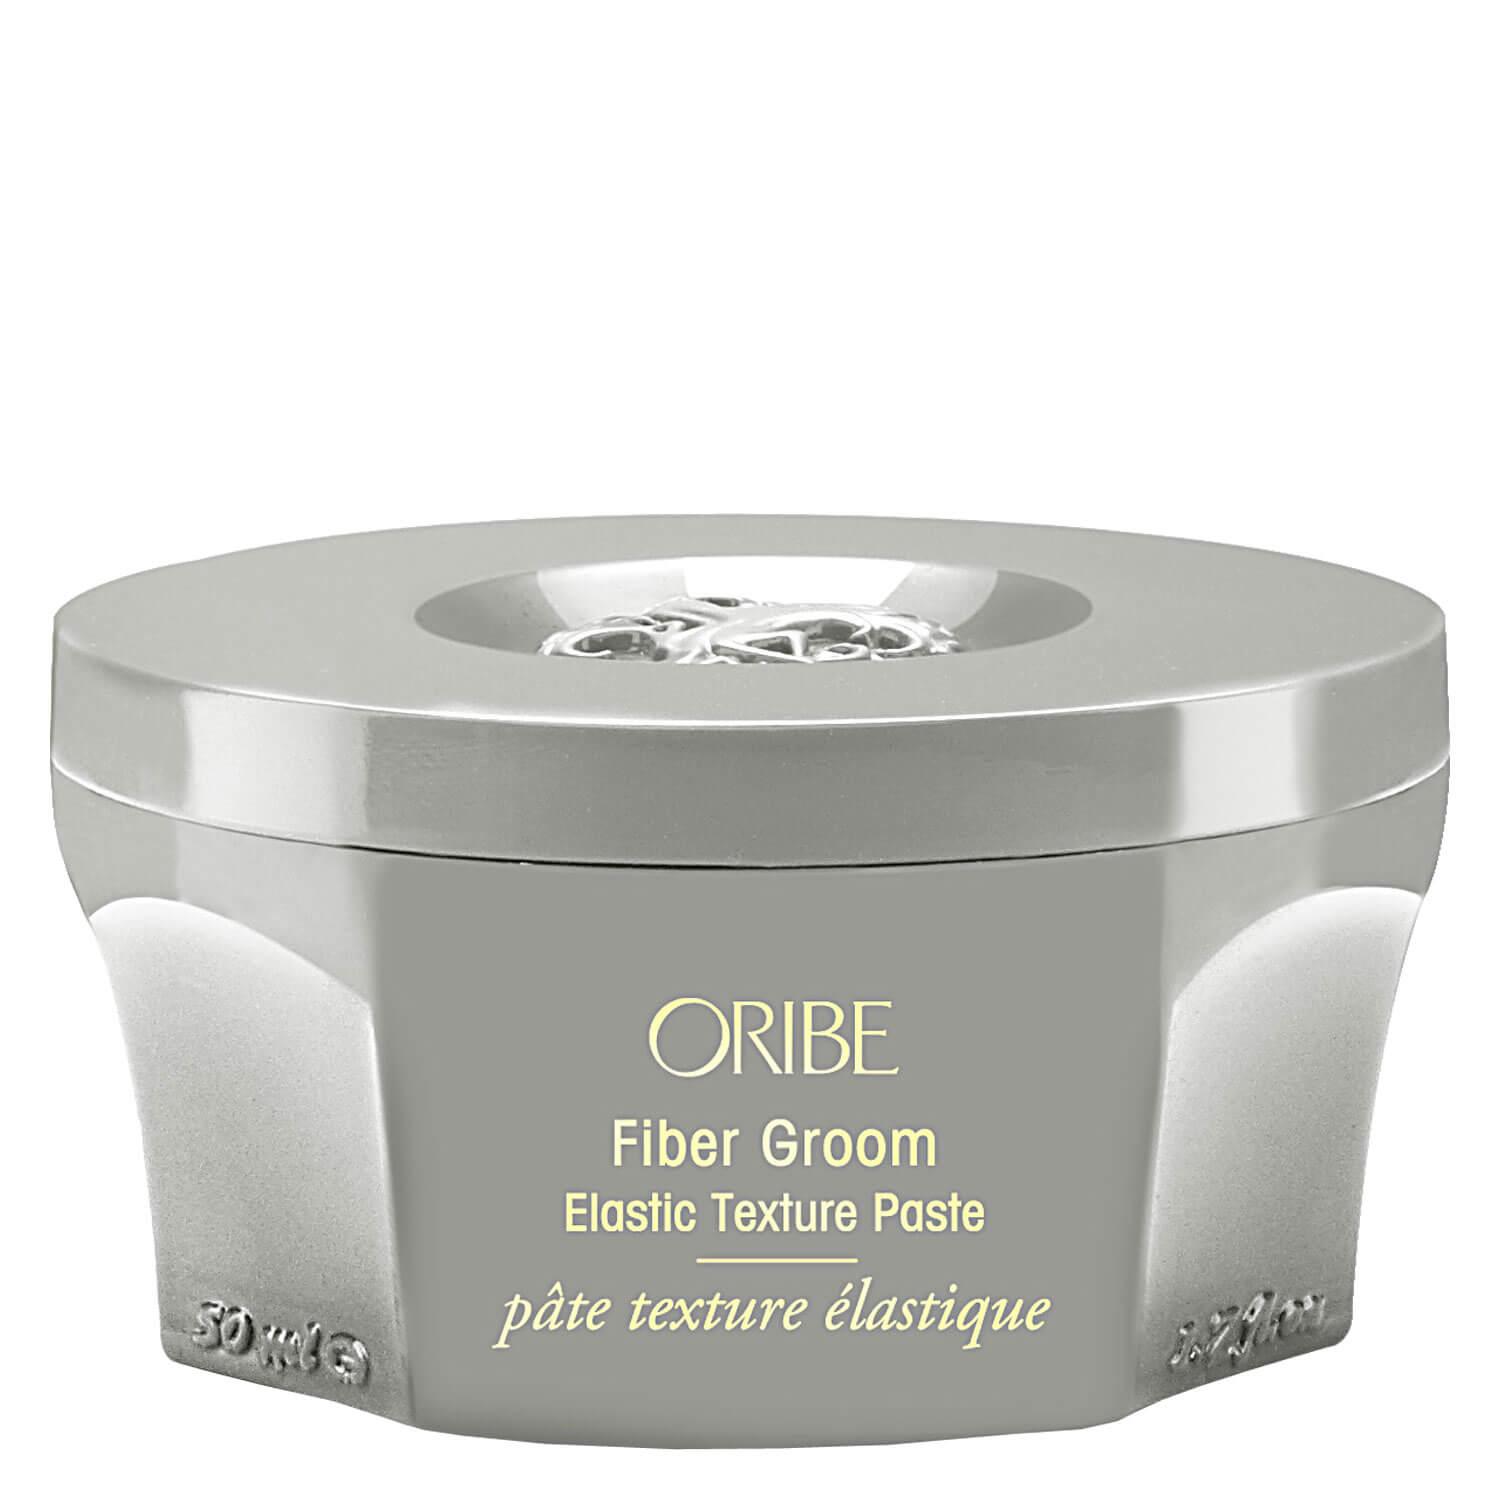 Oribe Style - Fiber Groom Elastic Texture Paste